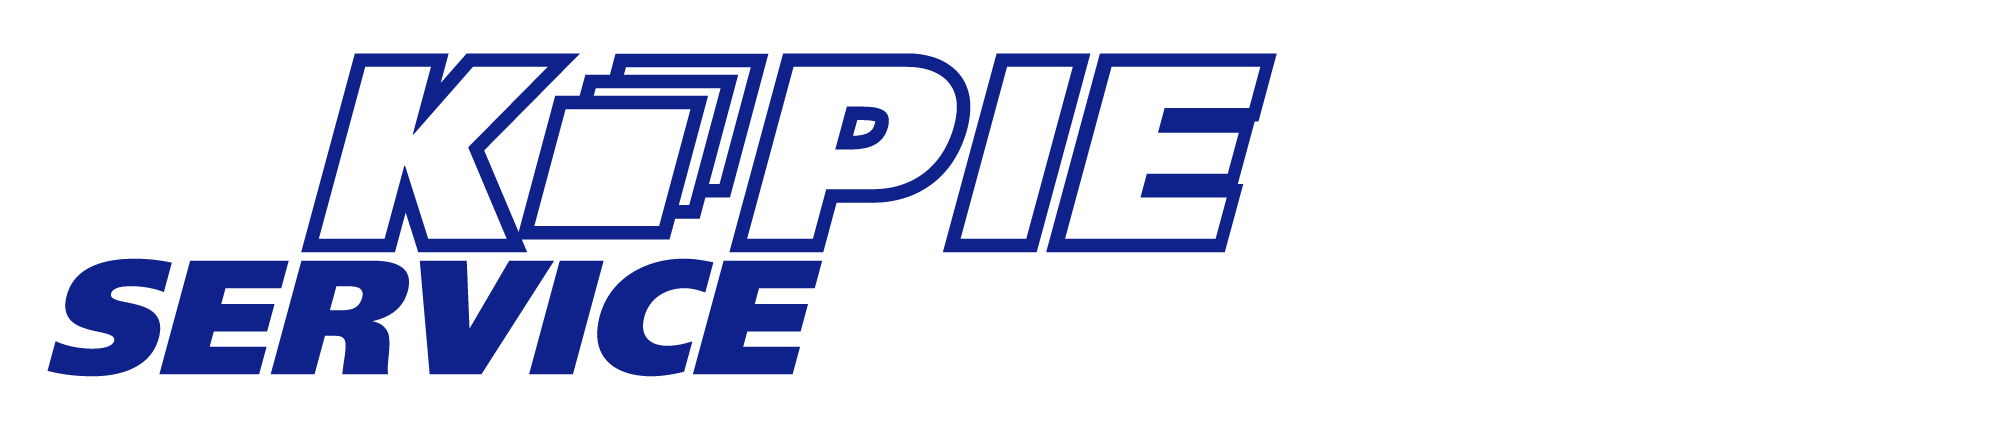 Logo kopie service tielt